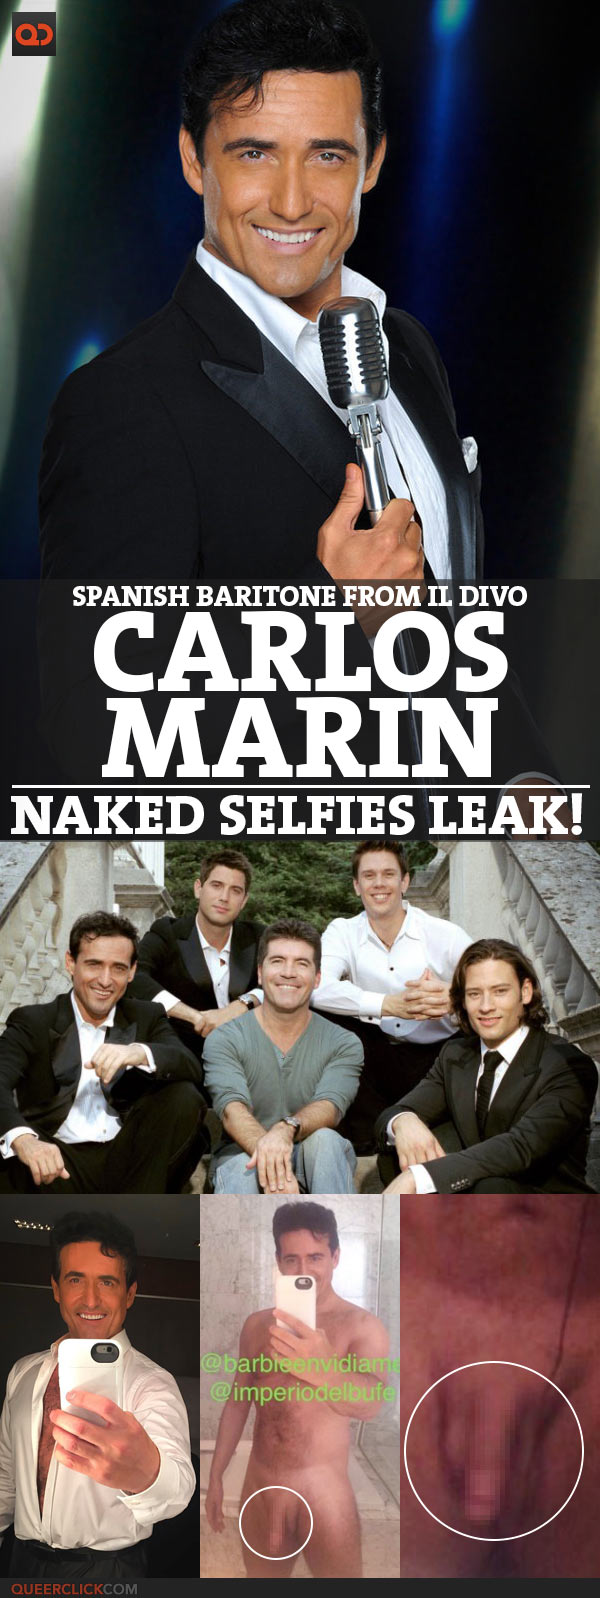 Carlos Marin, Spanish Baritone From Il Divo, Naked Selfies Leak!